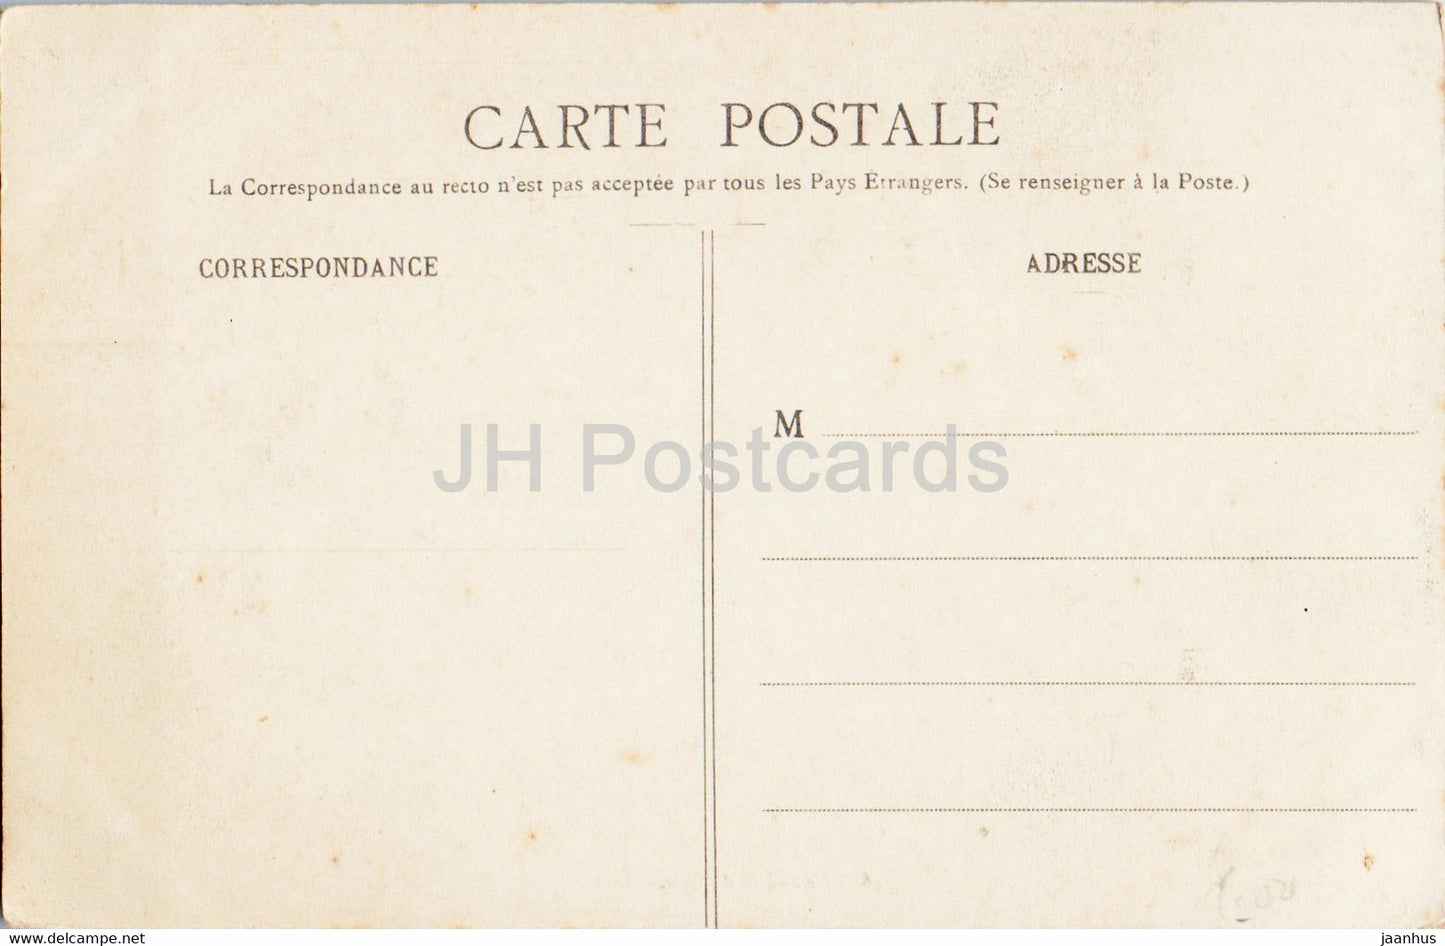 Aqueduc de Maintenon - ancient world - 46 - old postcard - France - unused